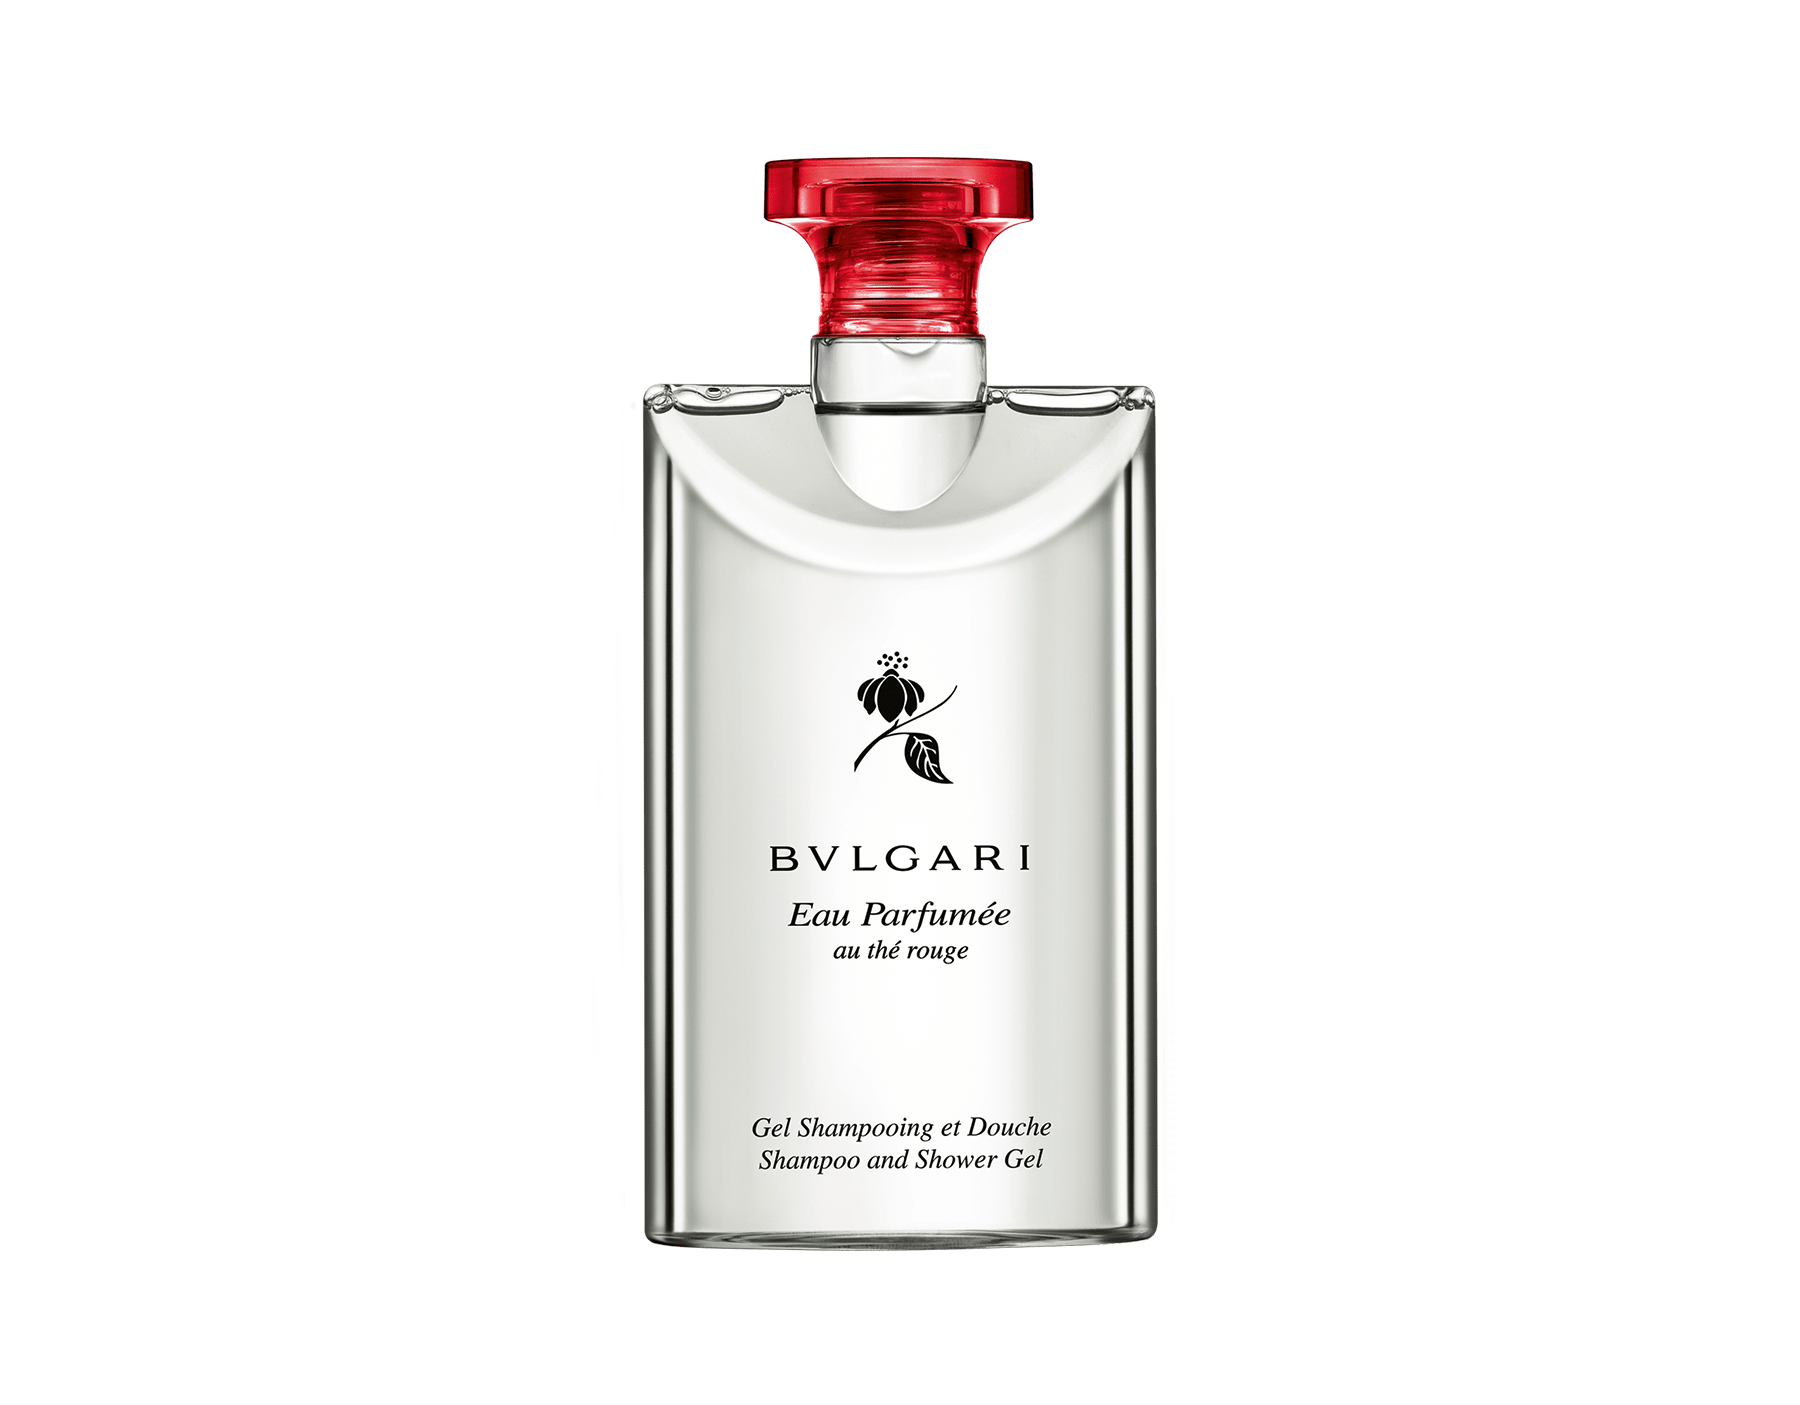 bulgari bvlgari eau parfumee